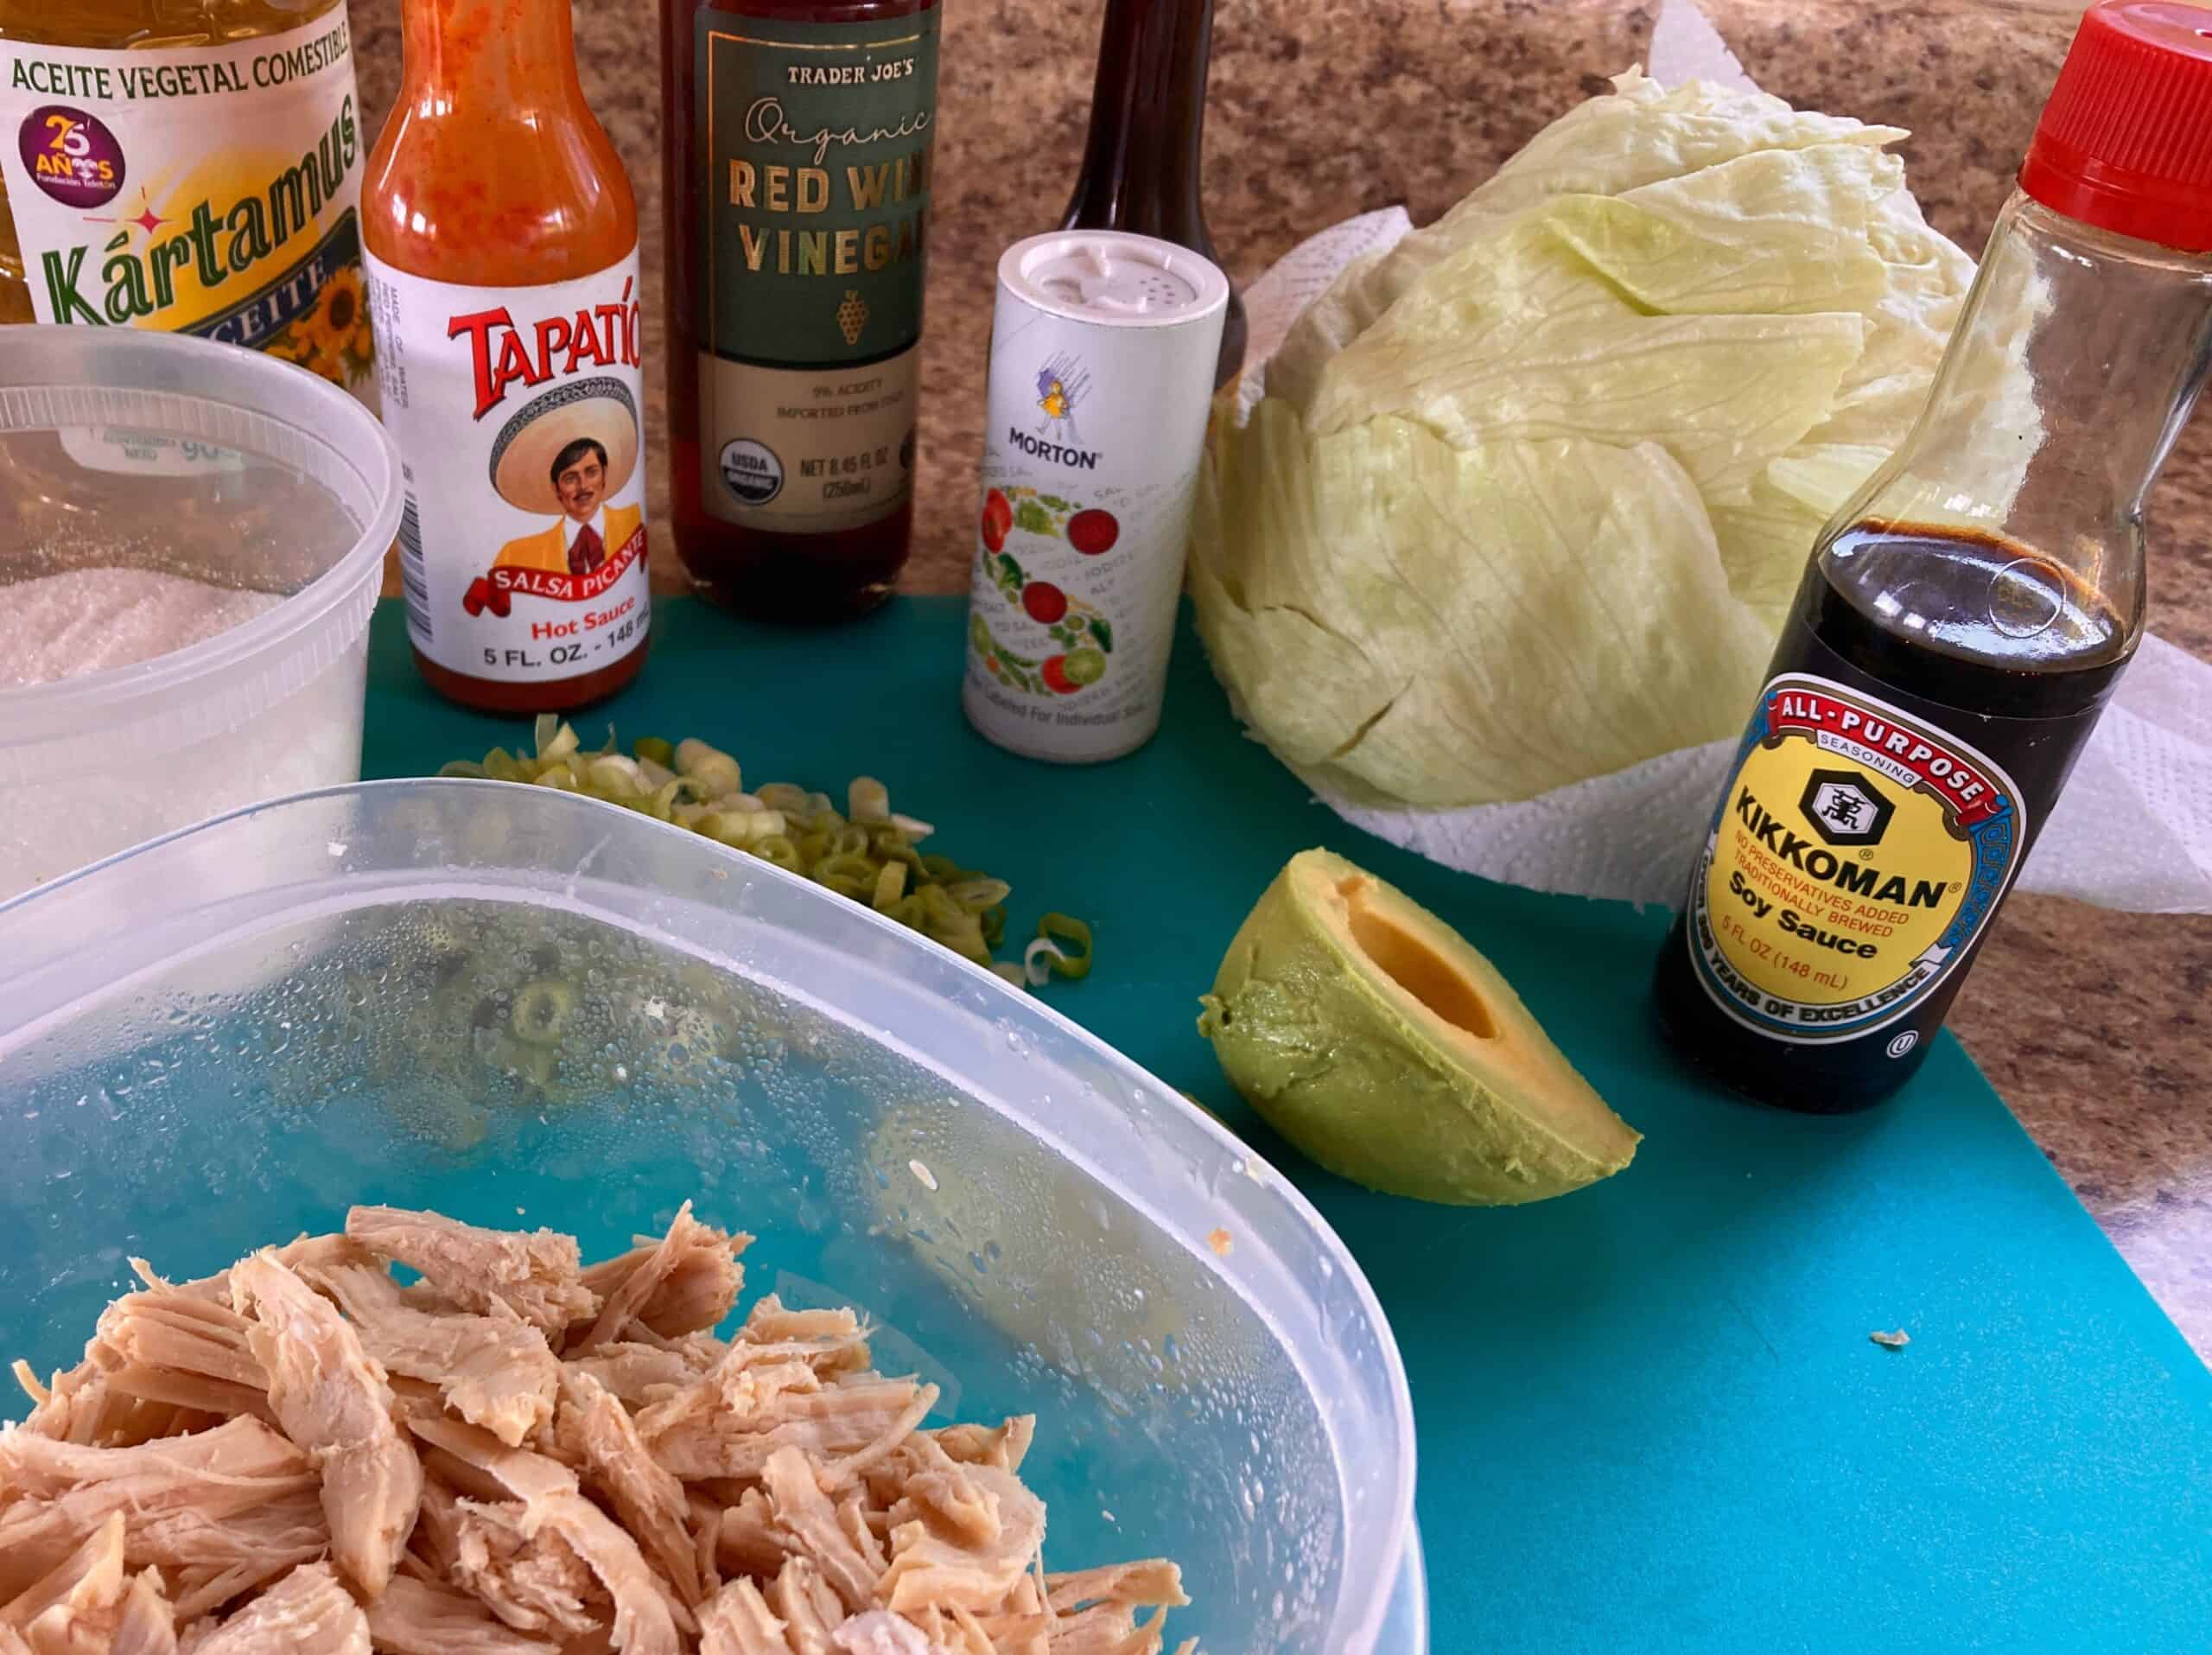 Chicken avocado salad ingredients on counter: shredded chicken, sugar, hot sauce, red wine vinegar, soy sauce, salt, avocado, lettuce.